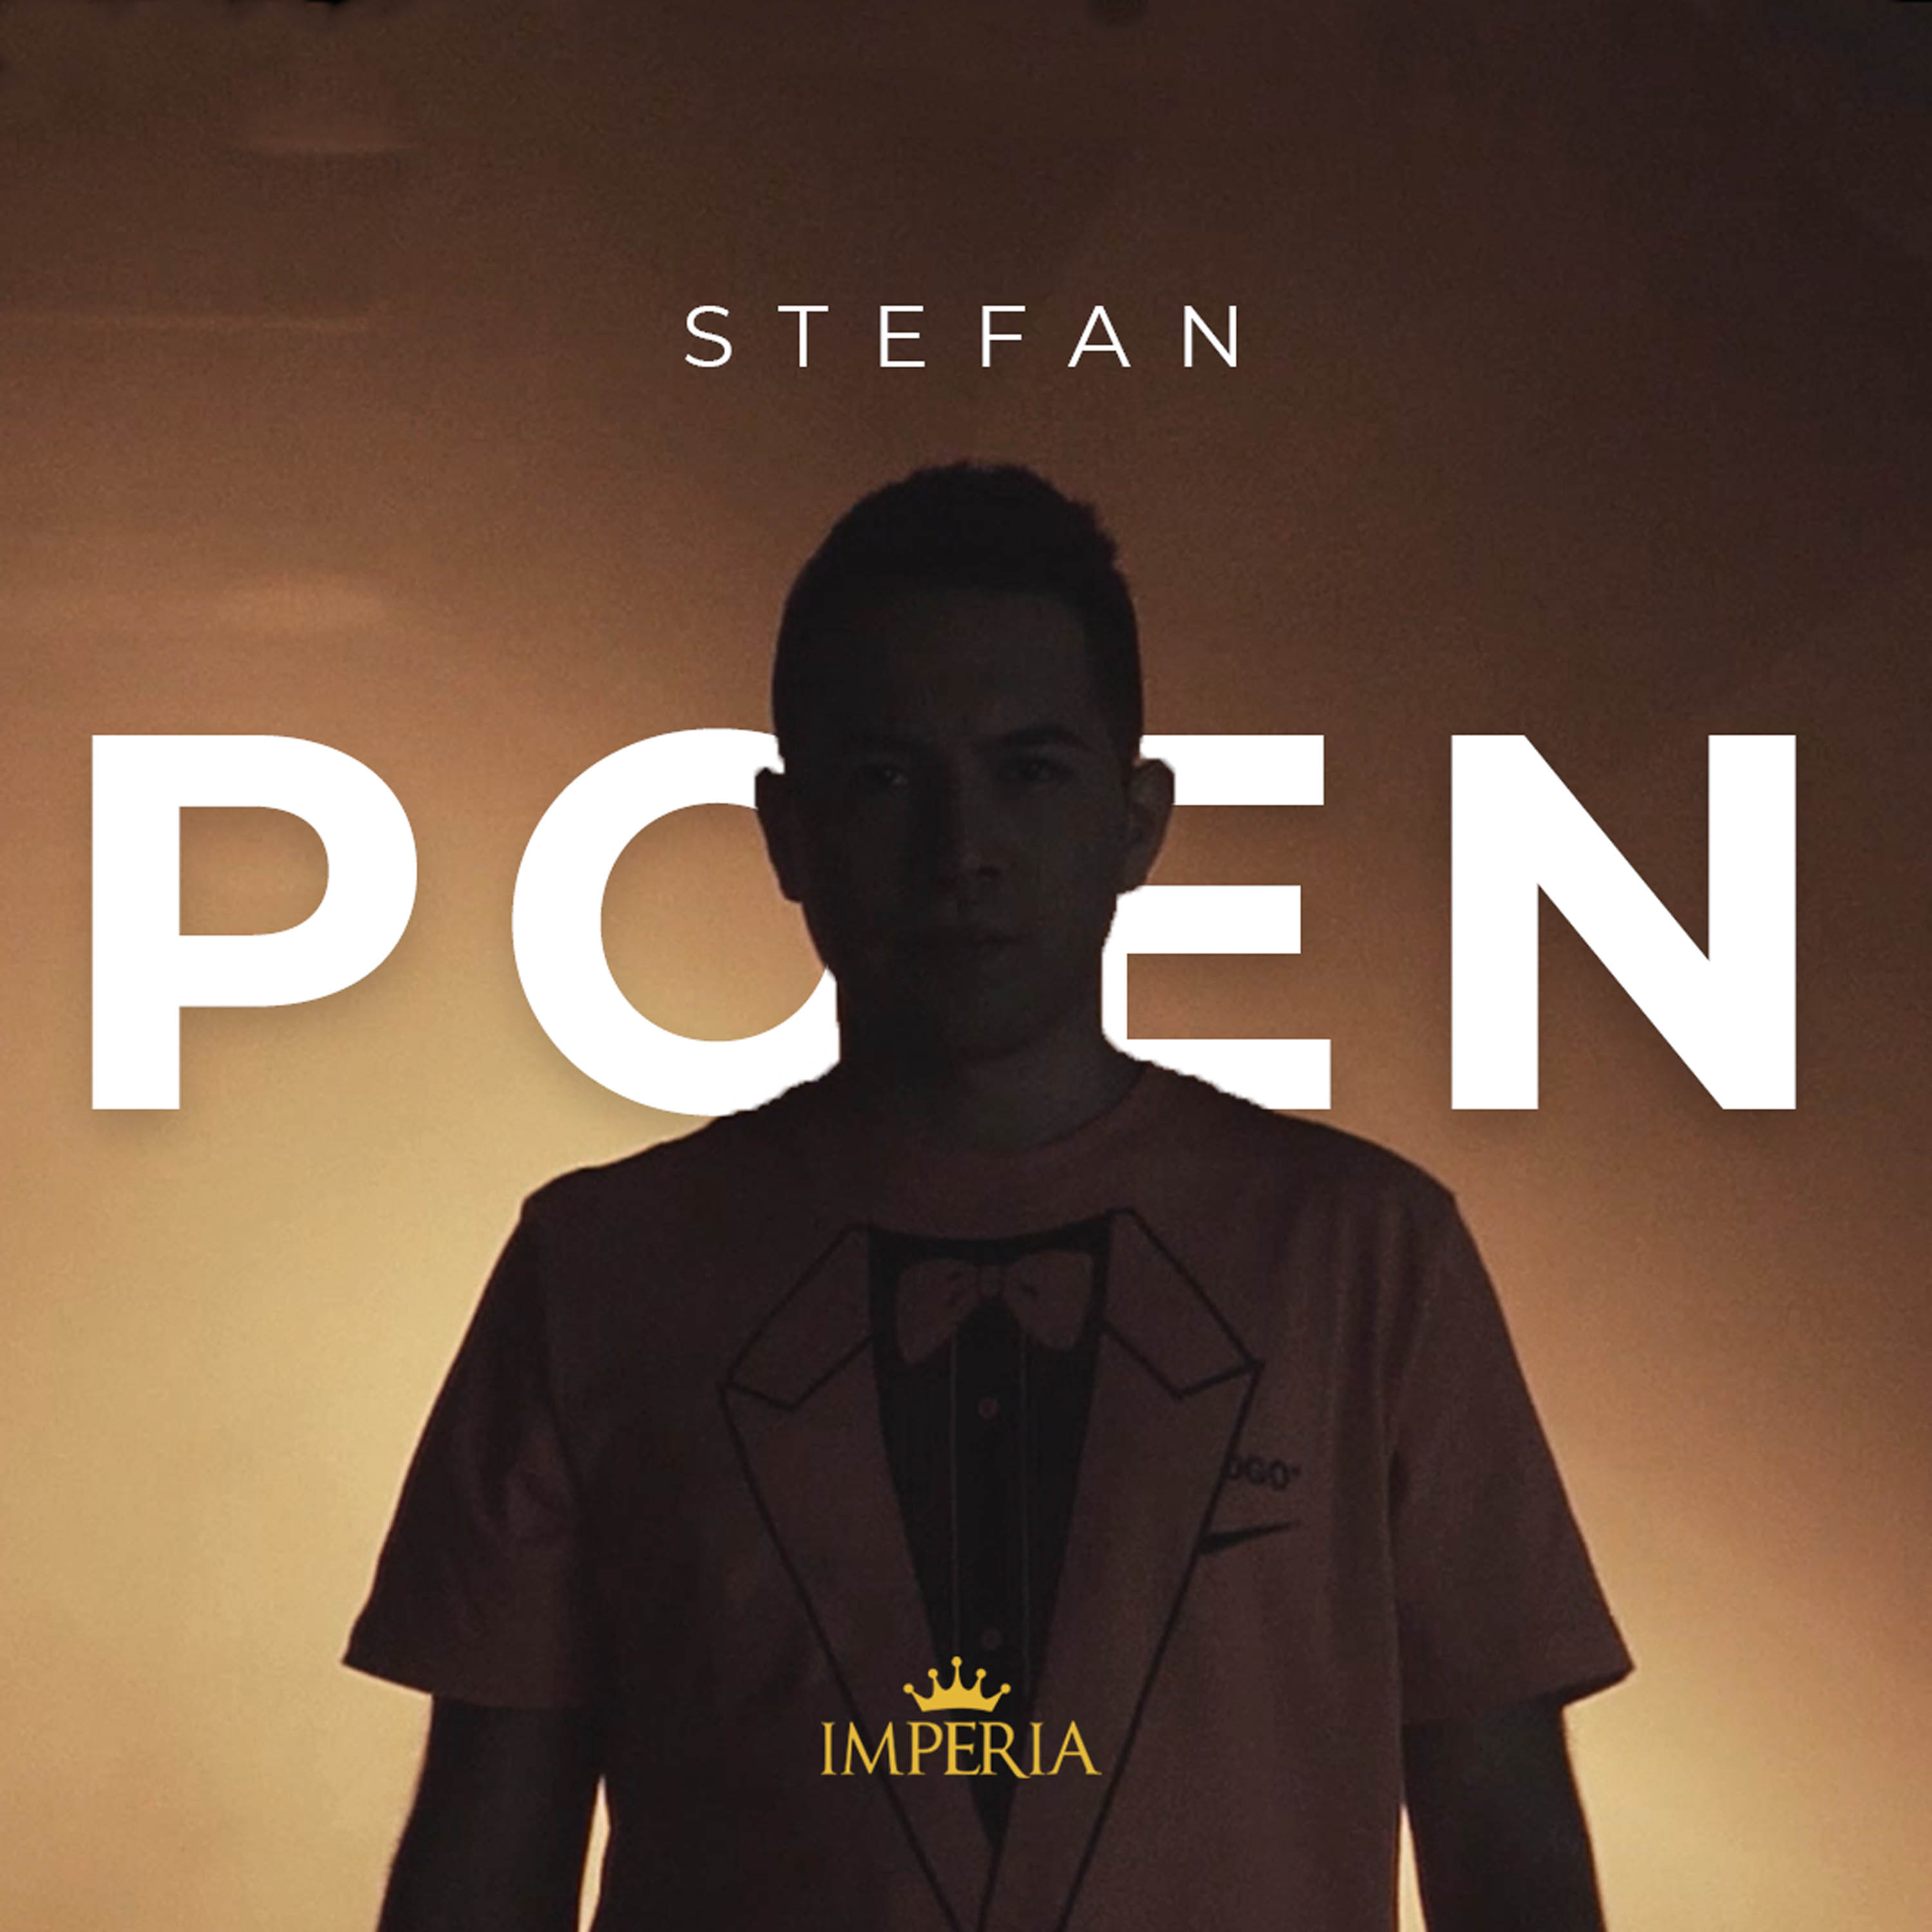 Stefan - Poen - Listen on Spotify, Deezer, YouTube, Google Play Music and Buy on Amazon, iTunes Google Play | EMDC Network